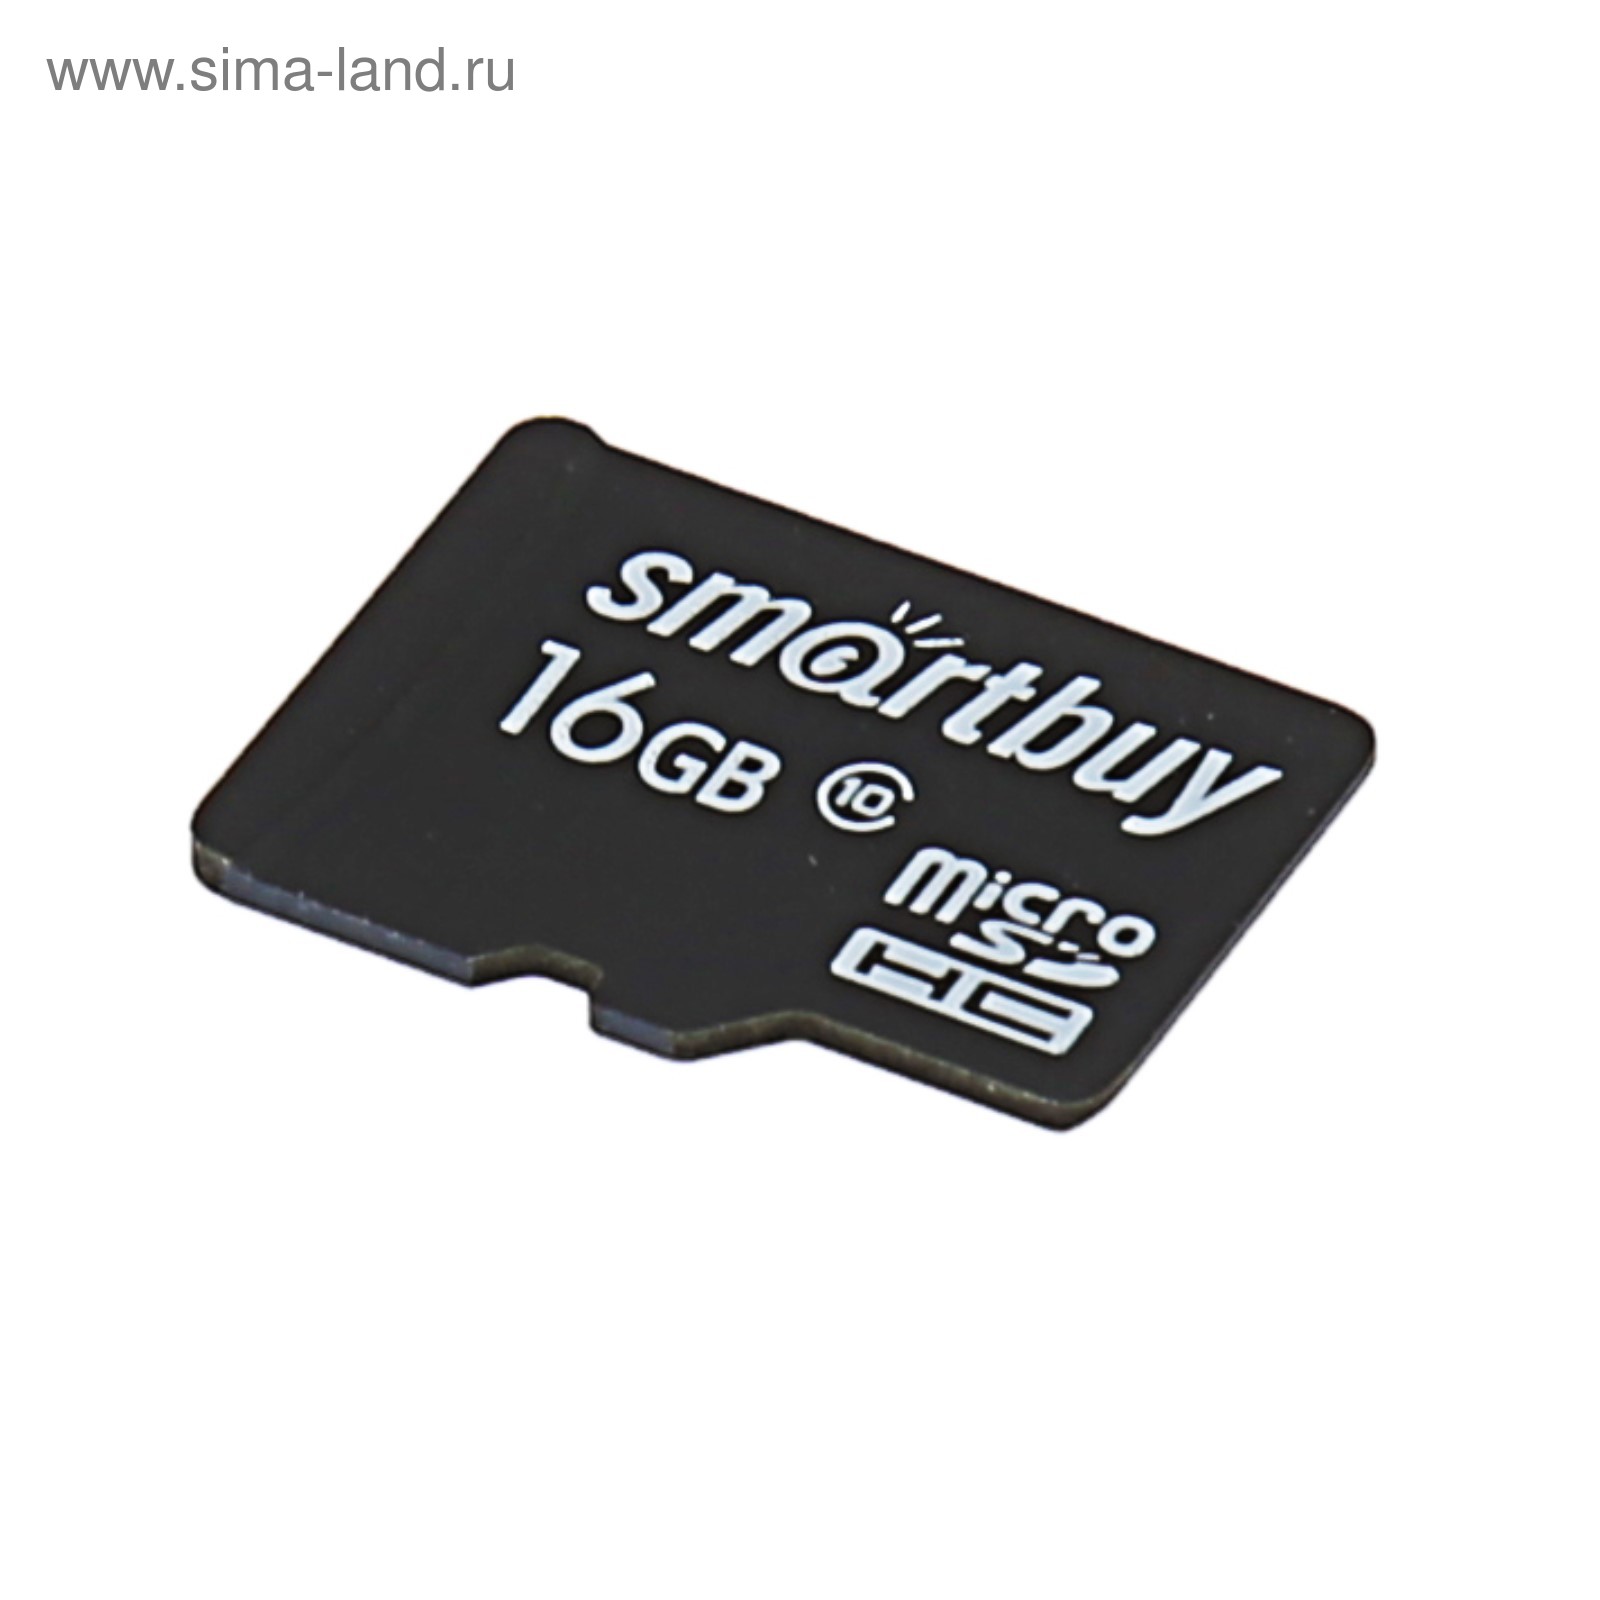 Флешка сд цена. Карта памяти SMARTBUY MICROSDHC class 10 16gb. Карта флэш-памяти MICROSD 16 ГБ Smart buy +SD адаптер (class 10) le. Микро СД SMARTBUY 16gb. SMARTBUY флешка 16 микро СД.